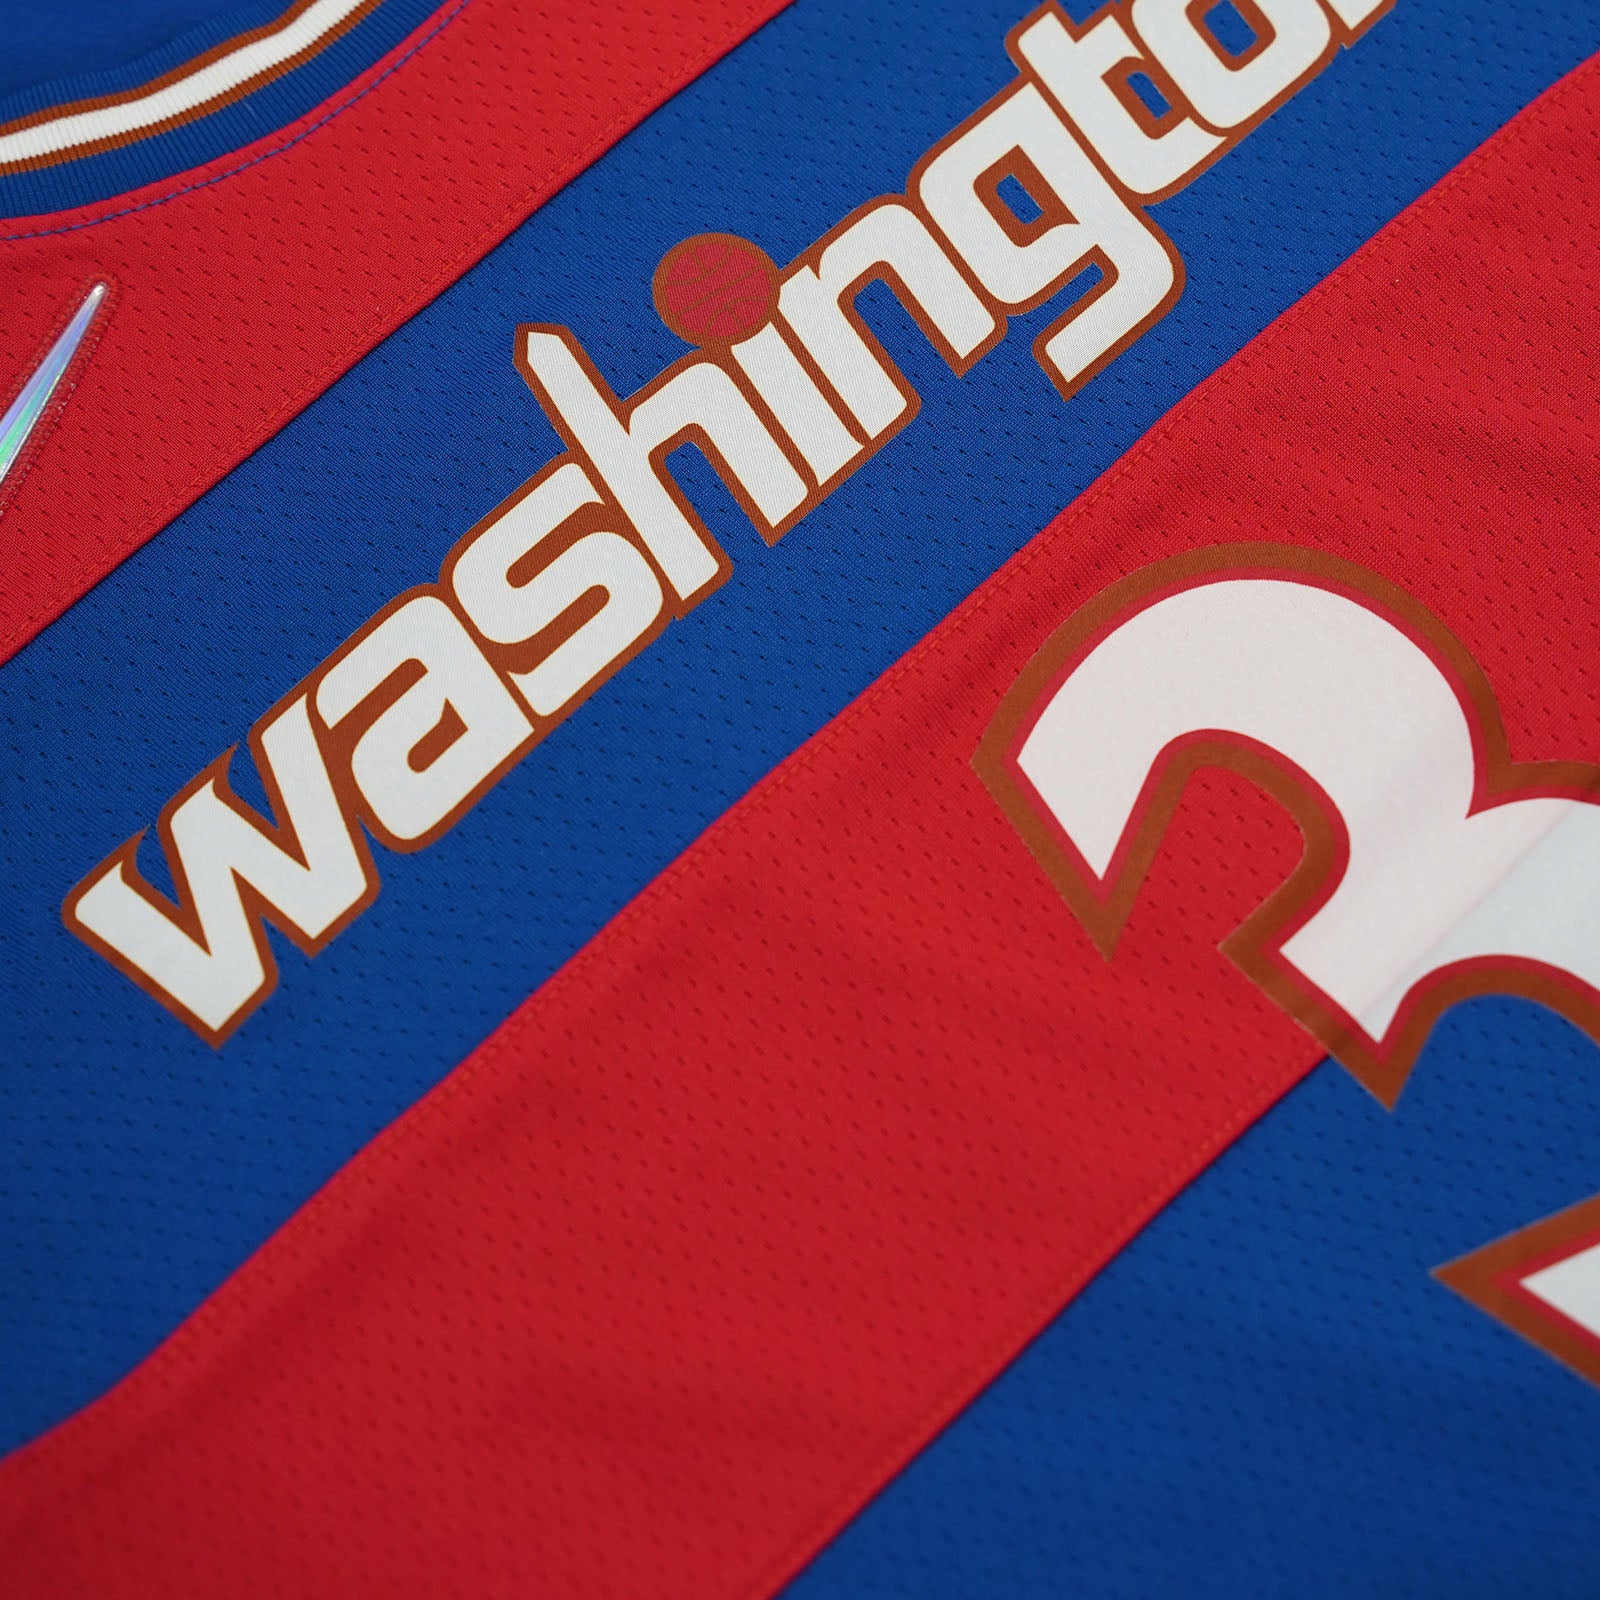 Washington Wizards Nike Icon Edition Swingman Jersey 22/23 - Red